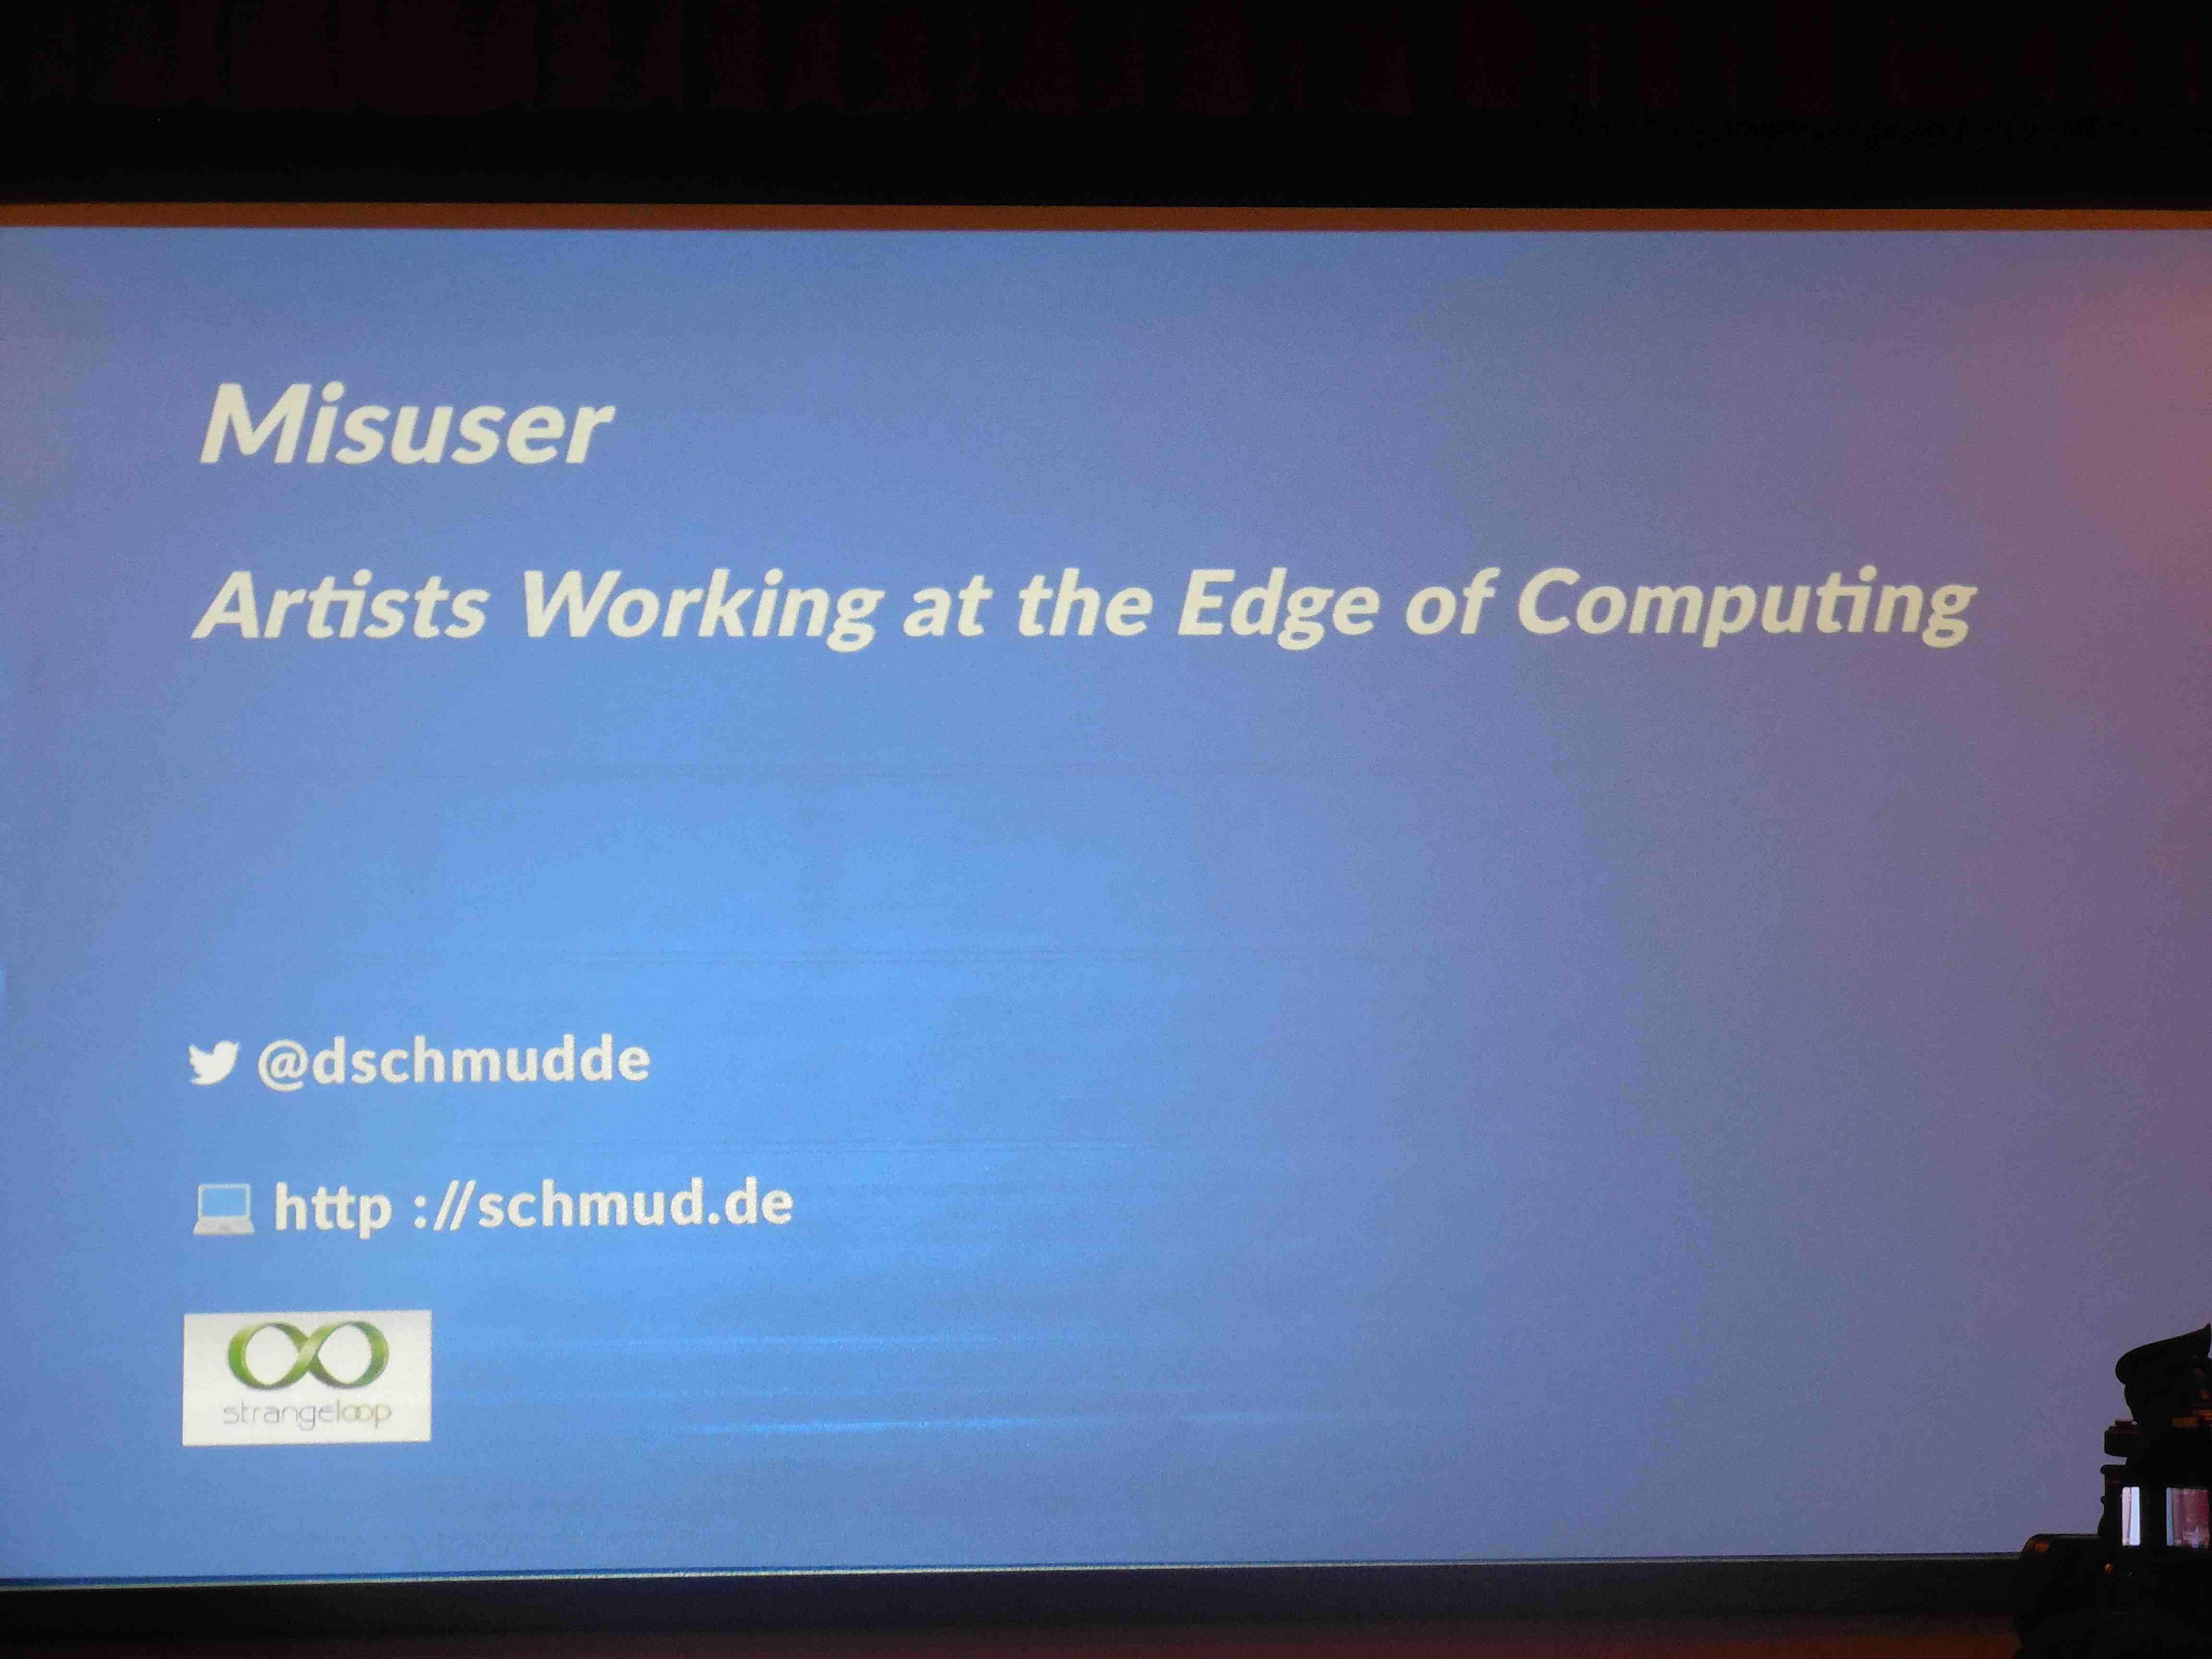 the splash screen to open David Schmudde's talk, 'Misuse'